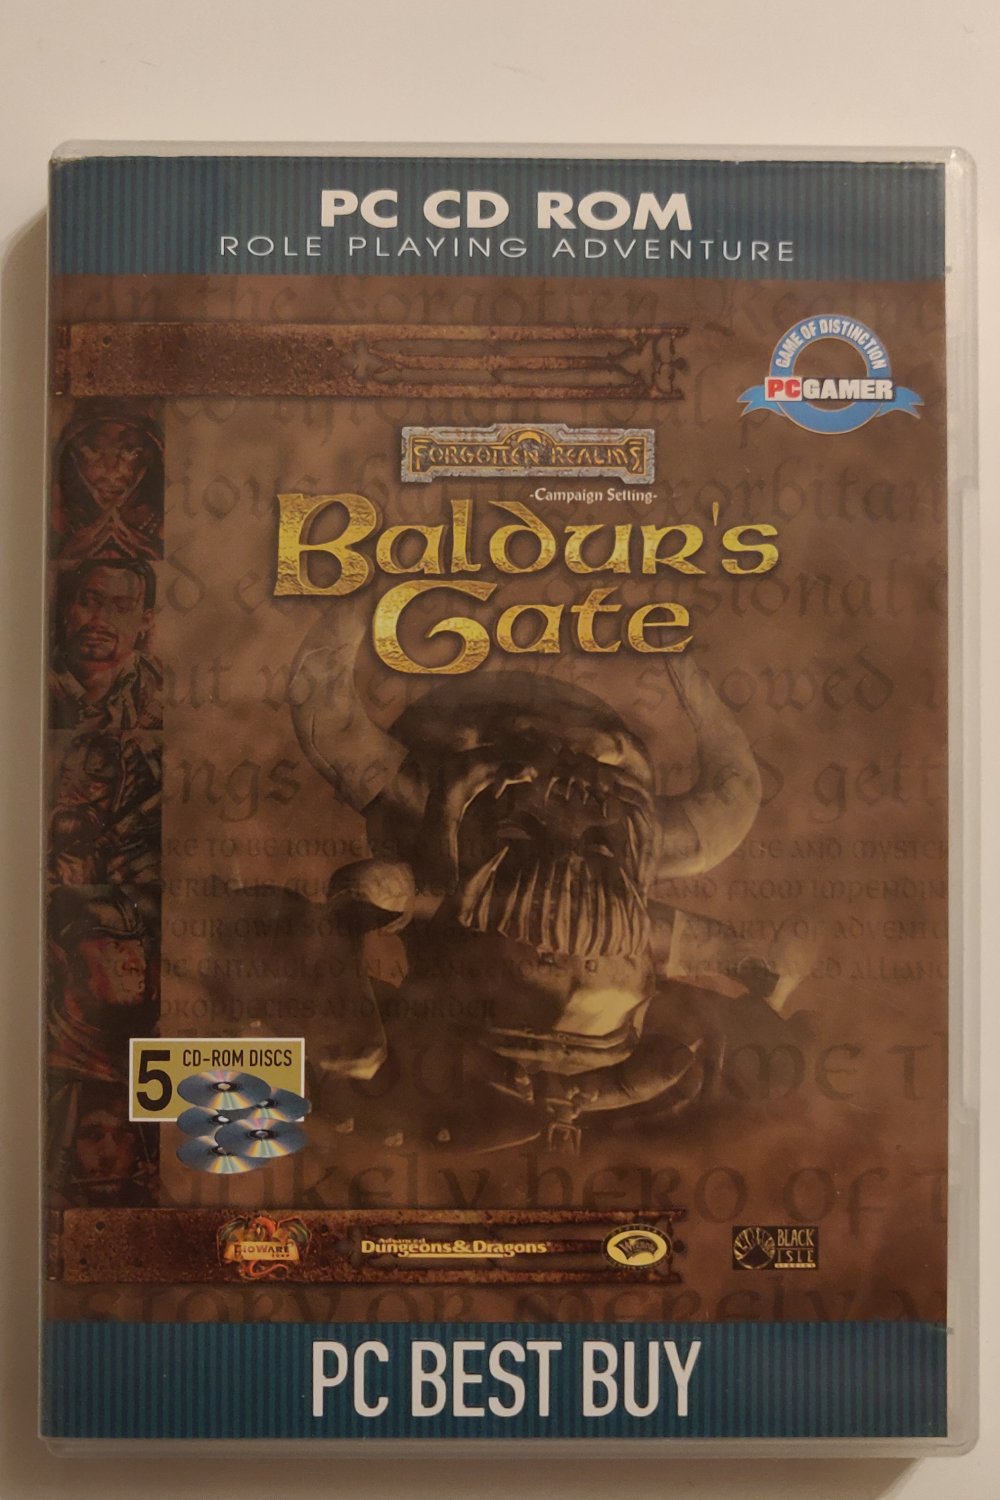 Baldur's Gate (PC) (CIB) - Picture 1 of 1